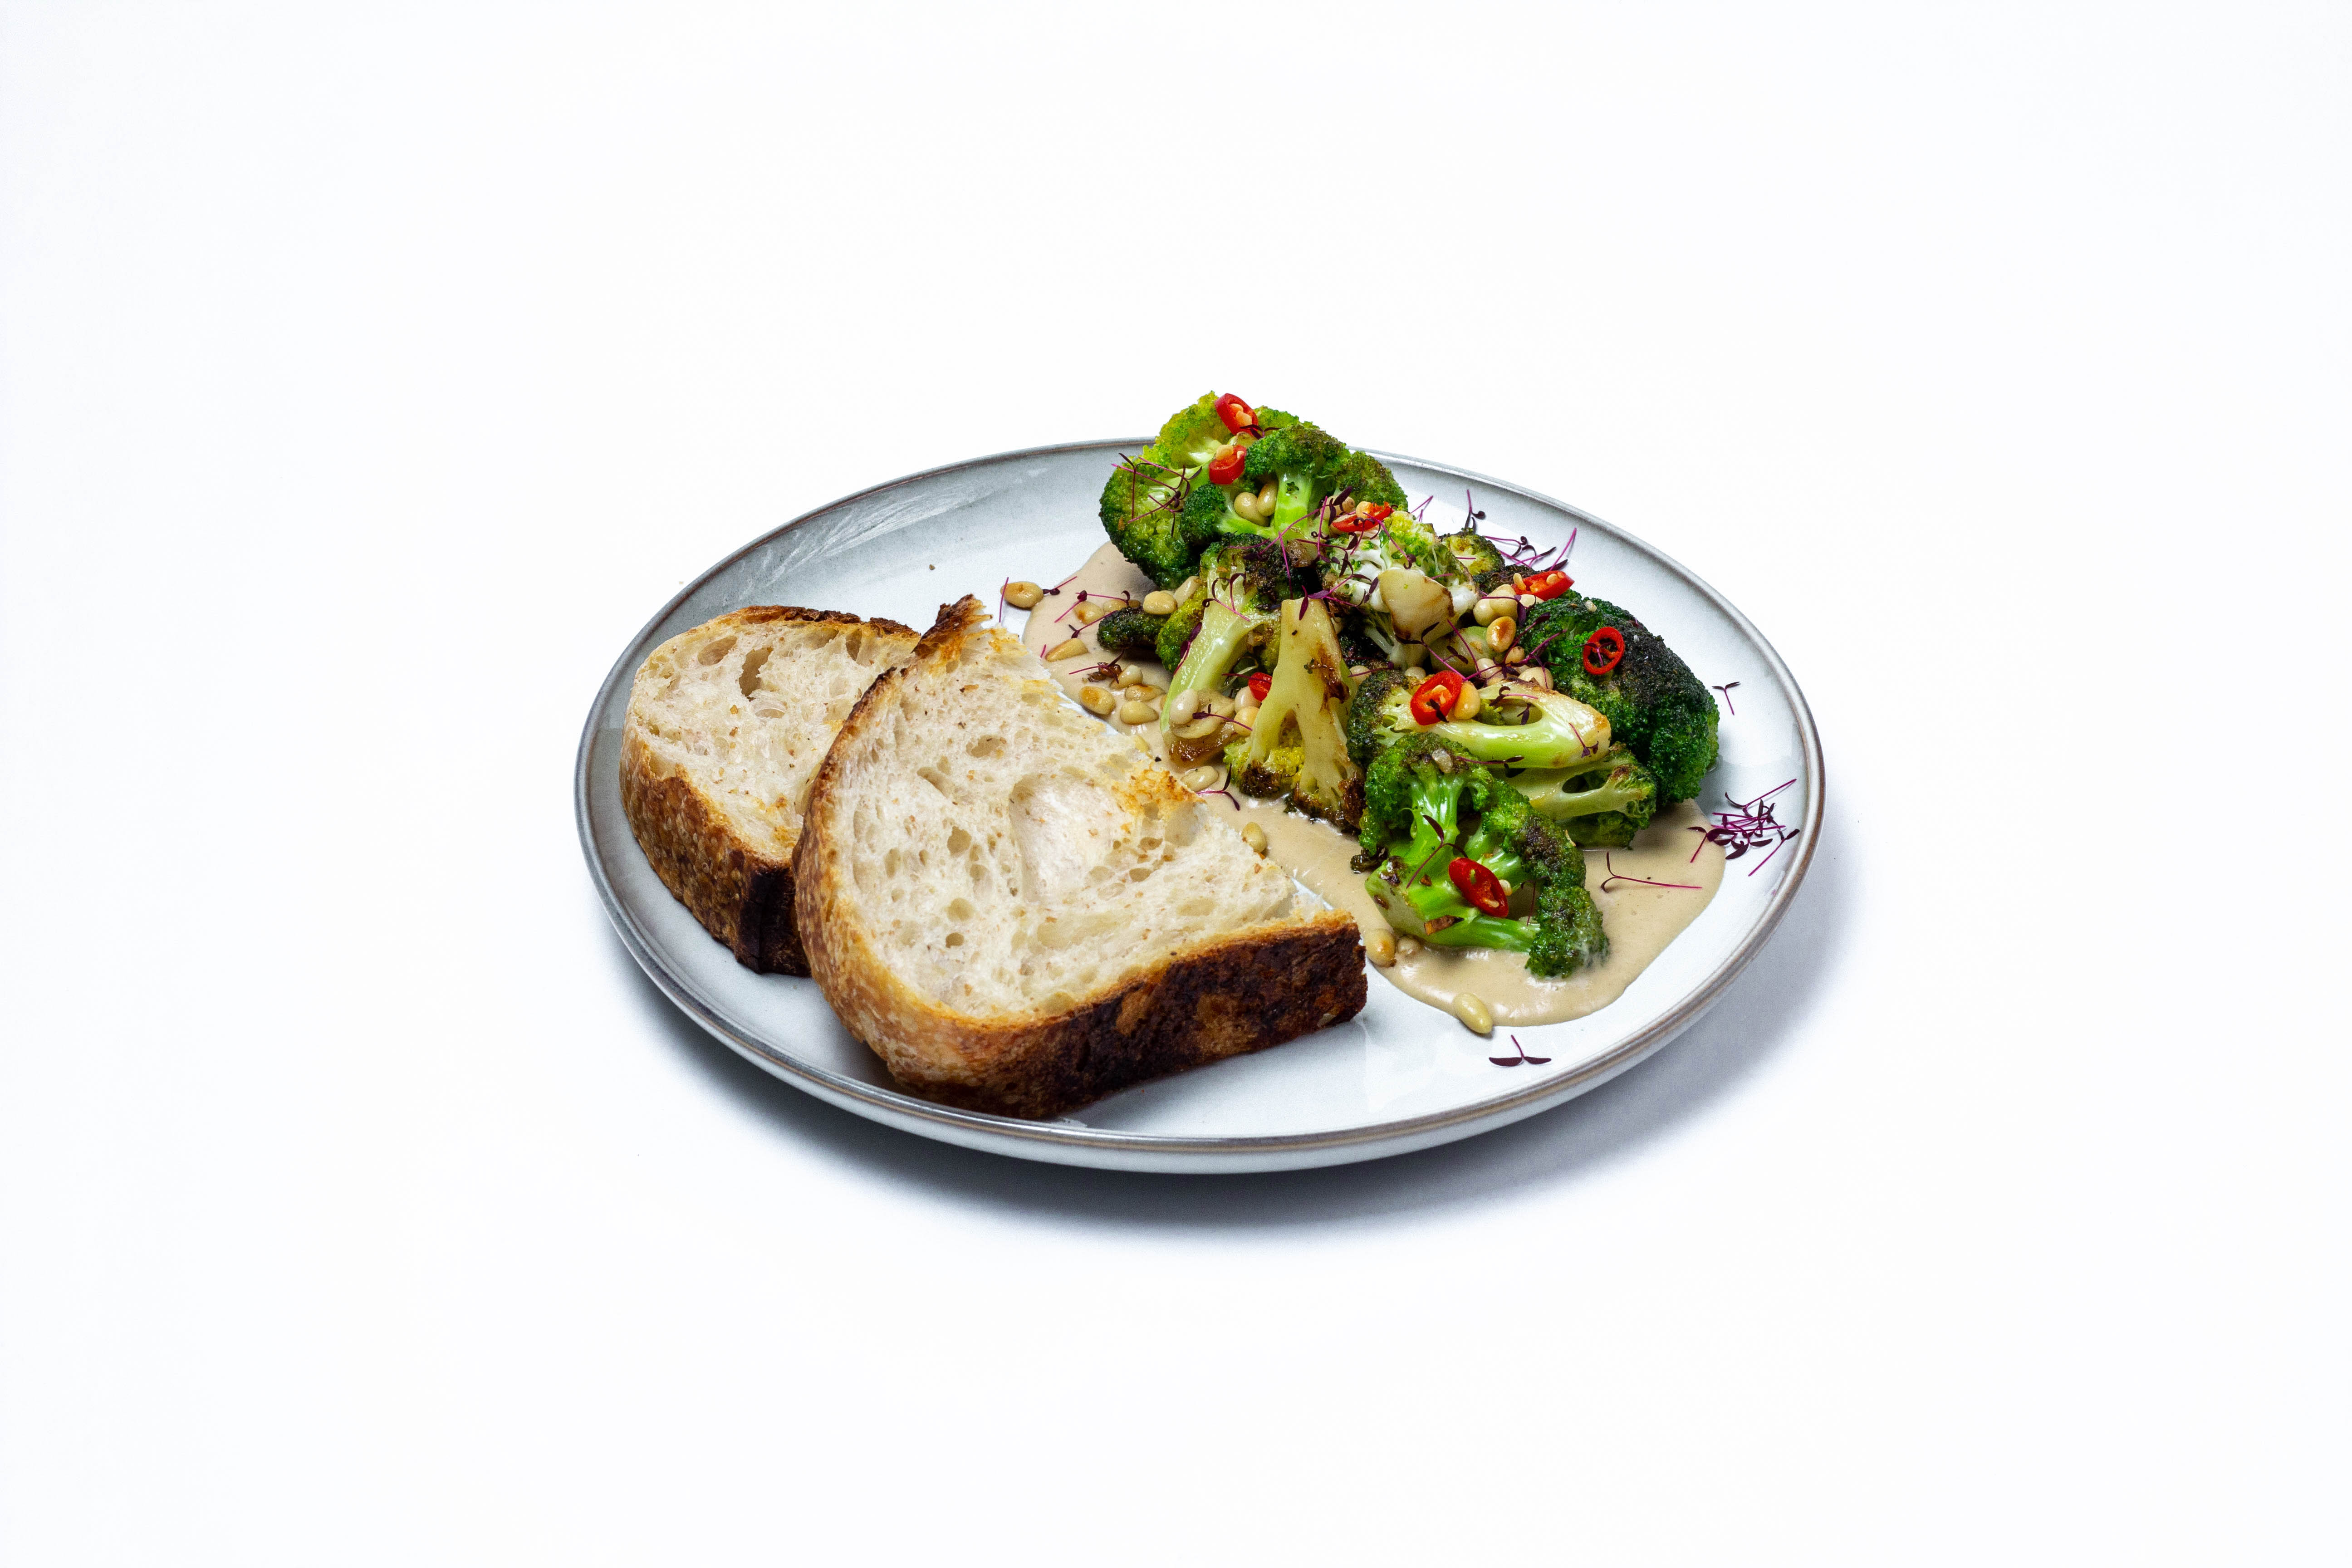 Broccoli with pine nuts, chili flakes in tahini sauce and sourdough bread tartin